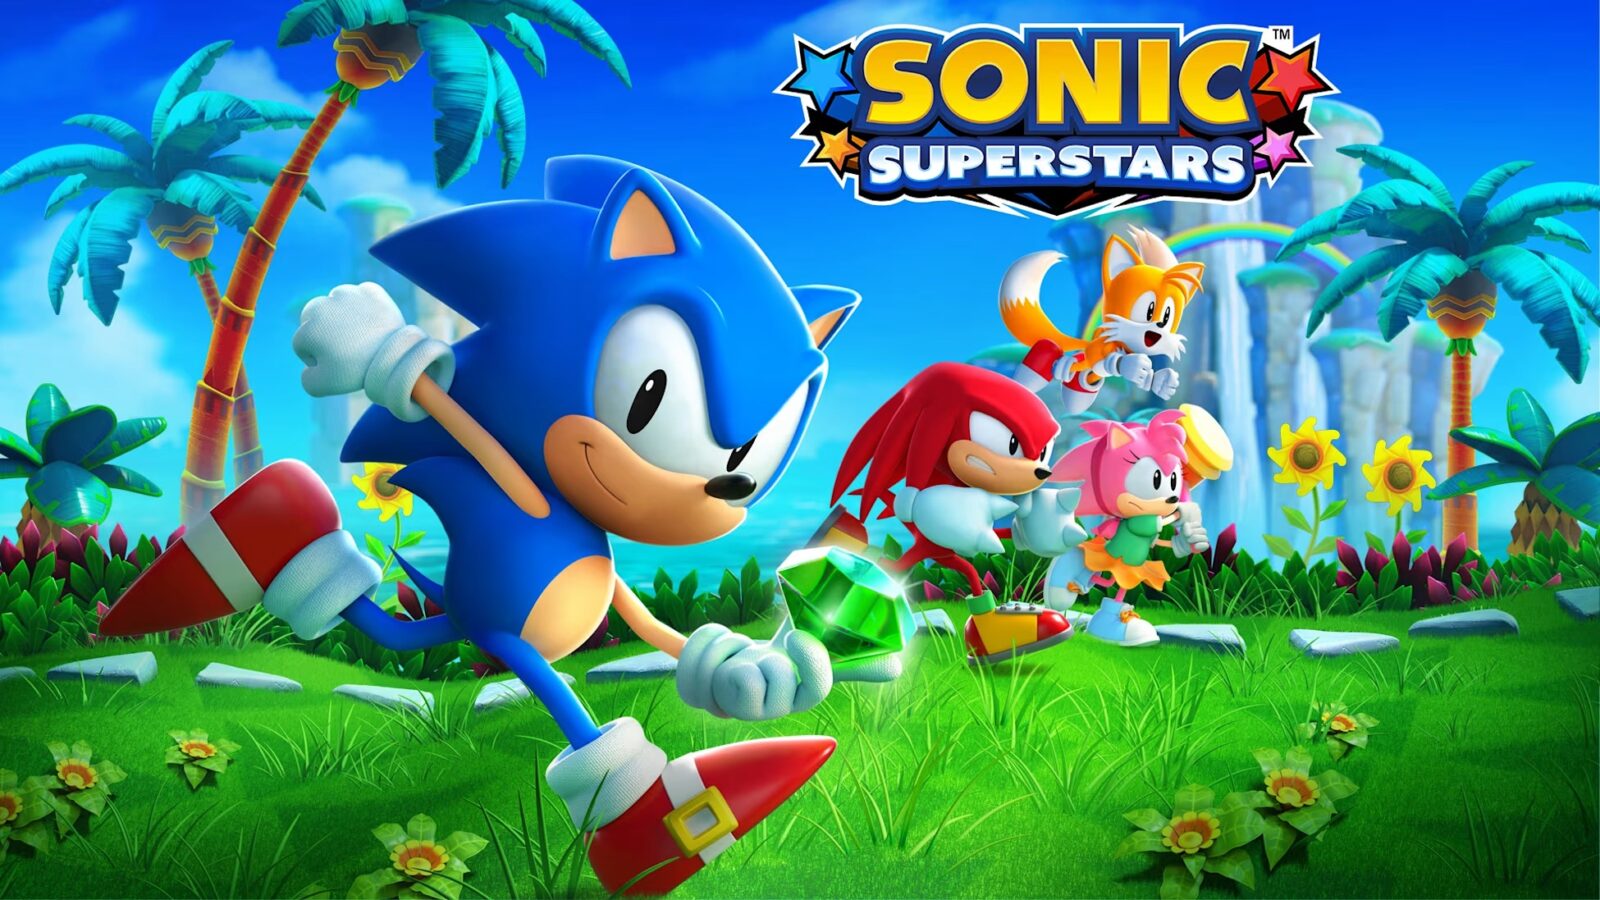 Sonic Superstars - Traje Amy Garçonete Retrô já disponível